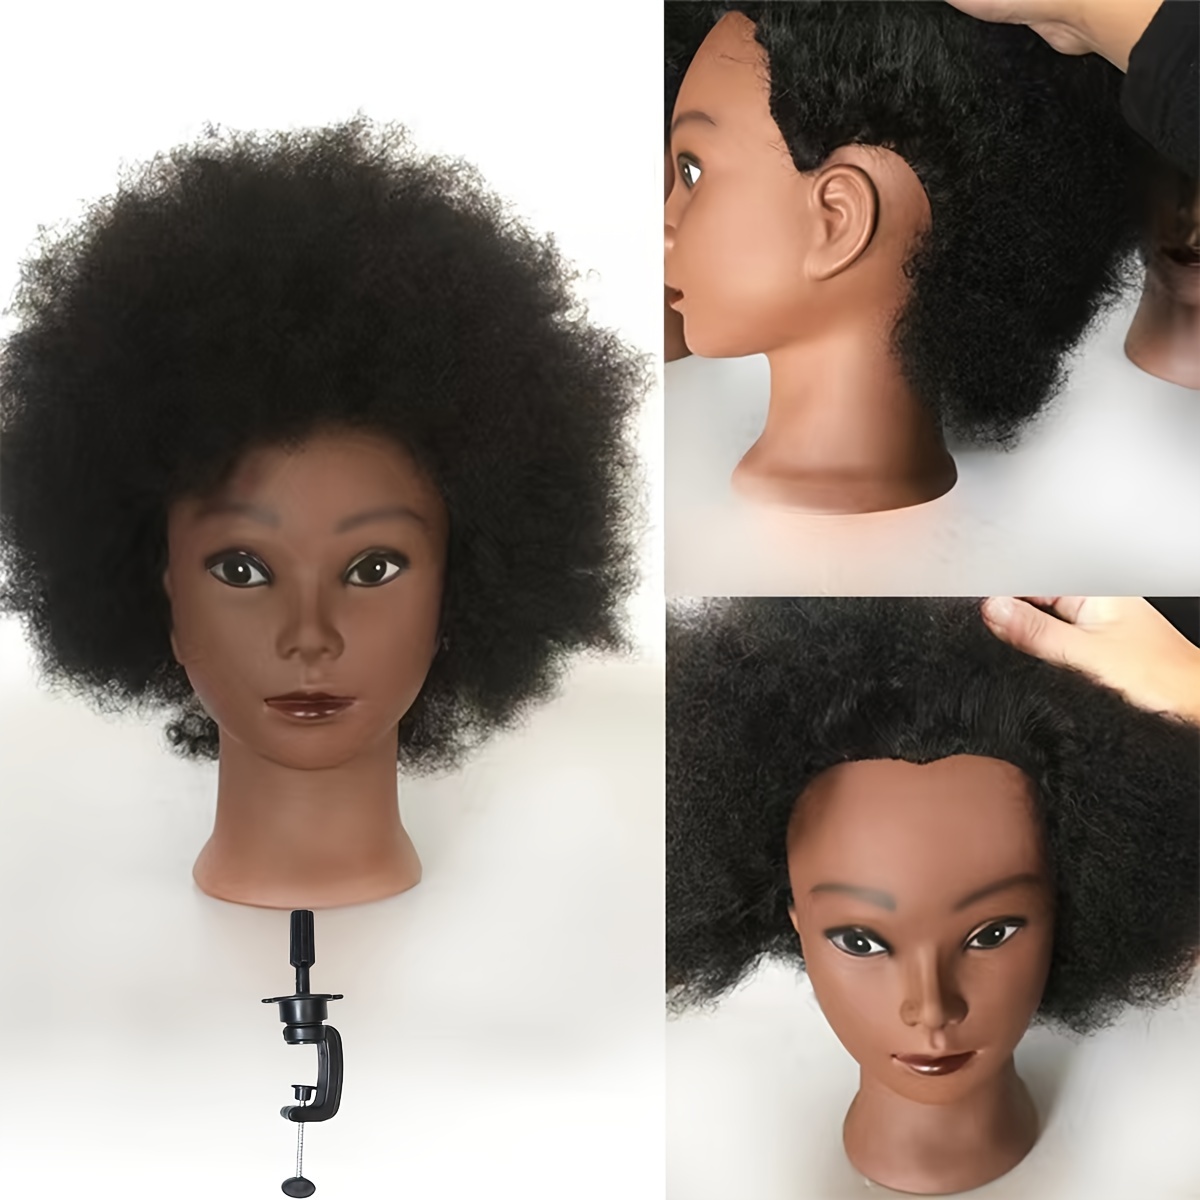 Mannequin Head Tripod Stand - Afrohagen Salon and Kosmetik